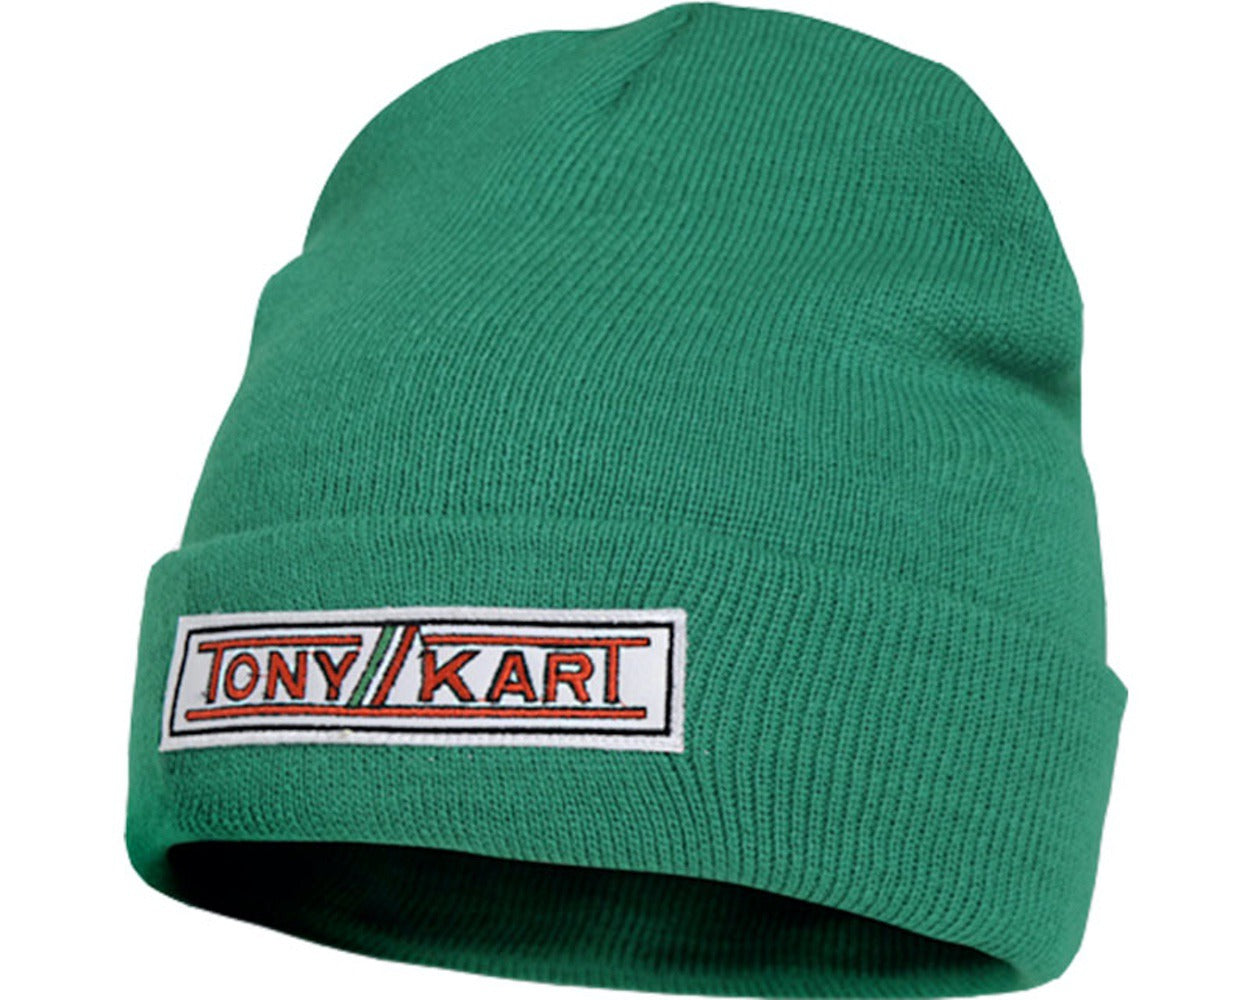 Tonykart Woolly Hat